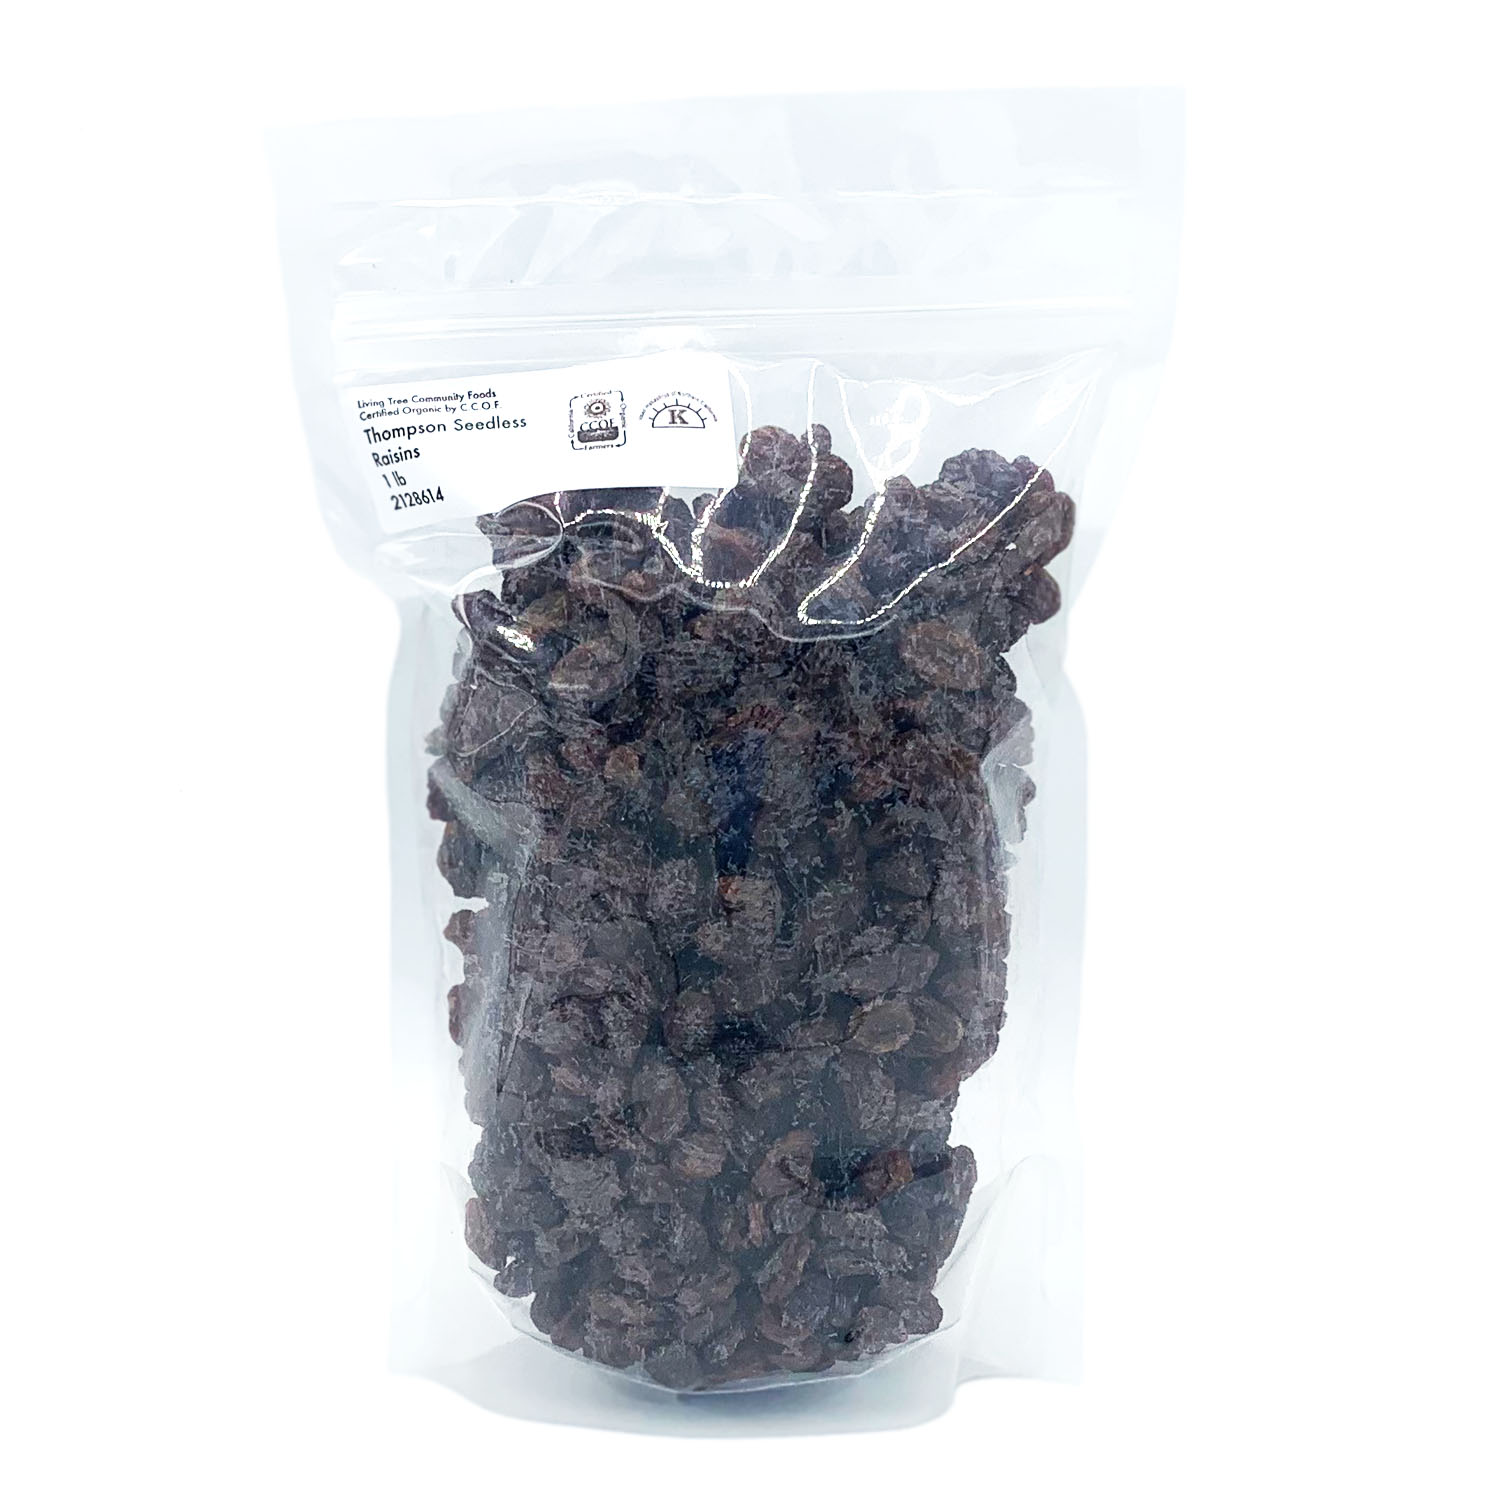 Thompsons Seedless Raisins Package